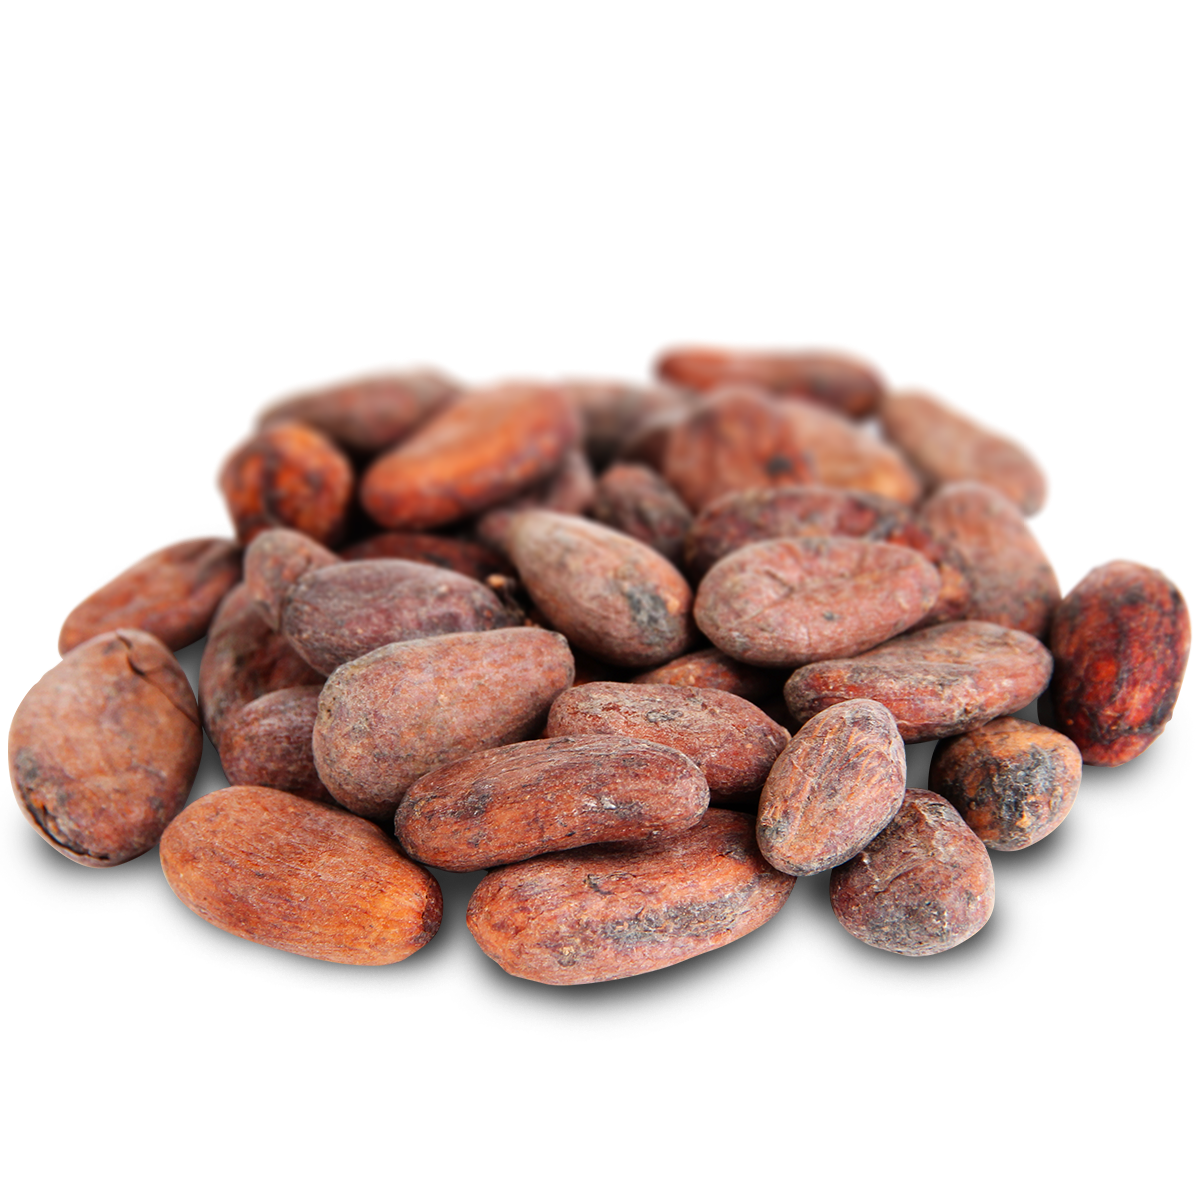 organic peruvian cacao